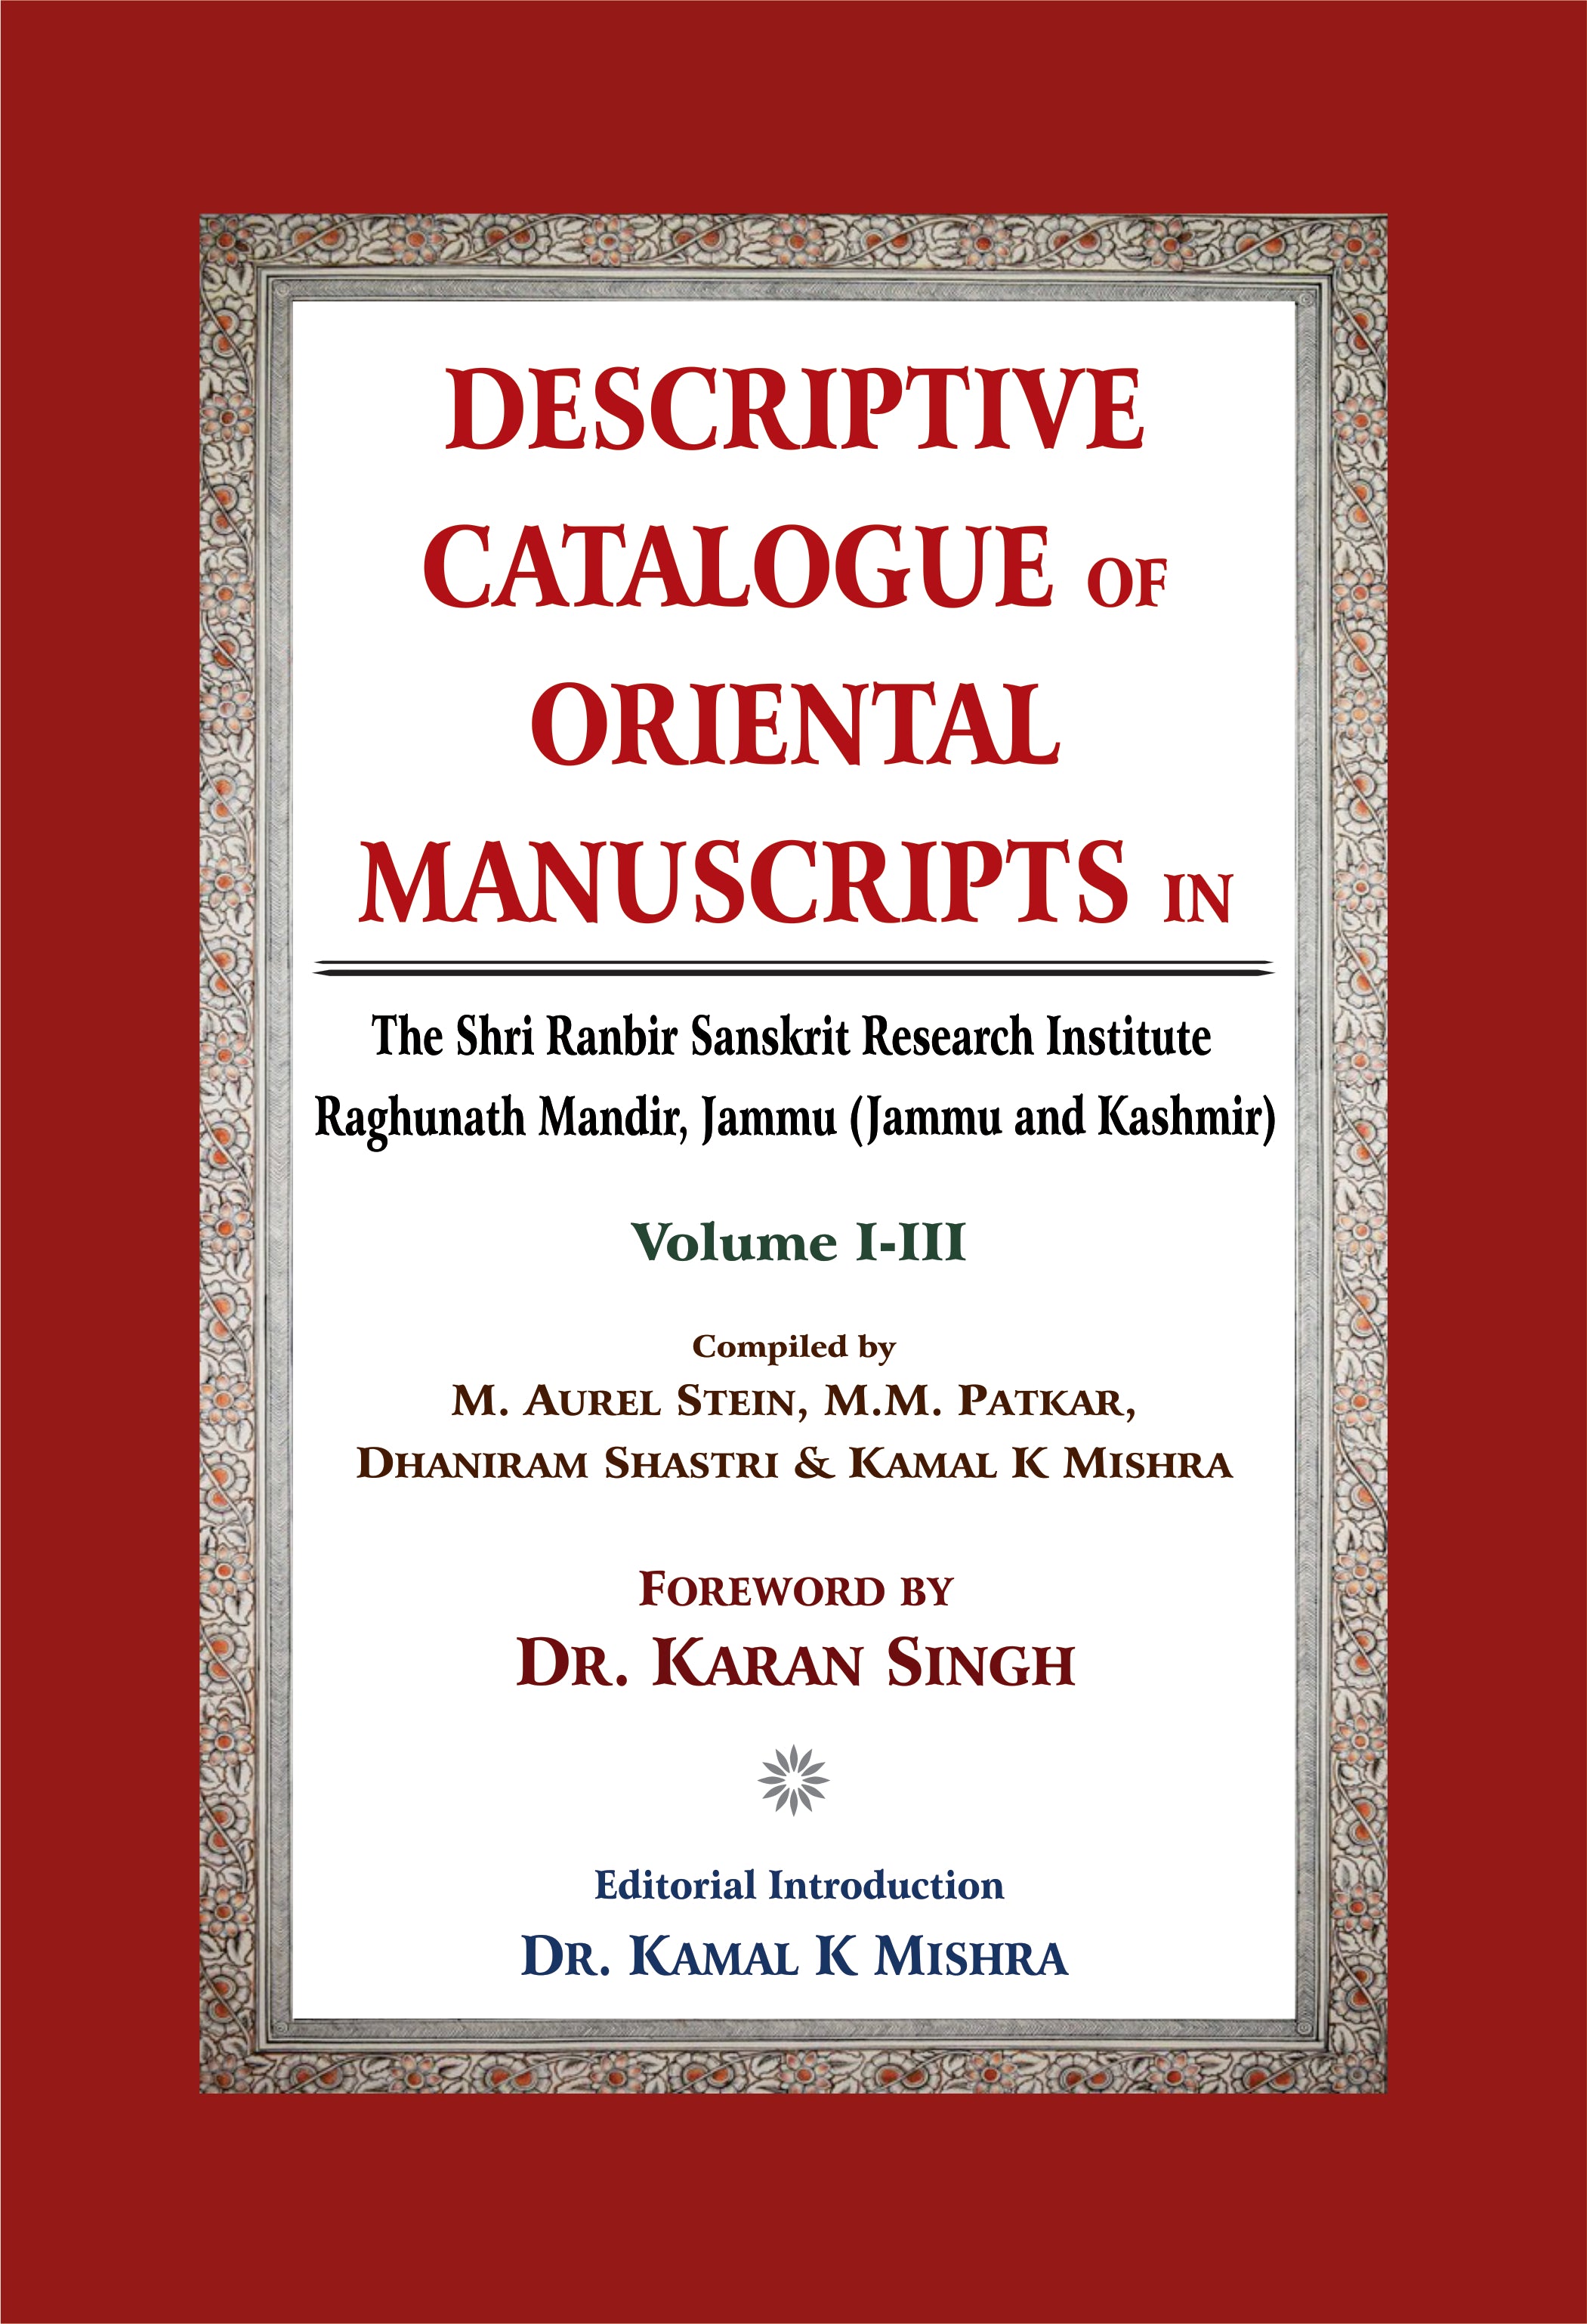 Descriptive Catalogue of Oriental Manuscripts in, 3 Vols: The Shri Ranbir Sanskrit Research Institute Raghunath Mandir, Jammu (Jammu & Kashmir)